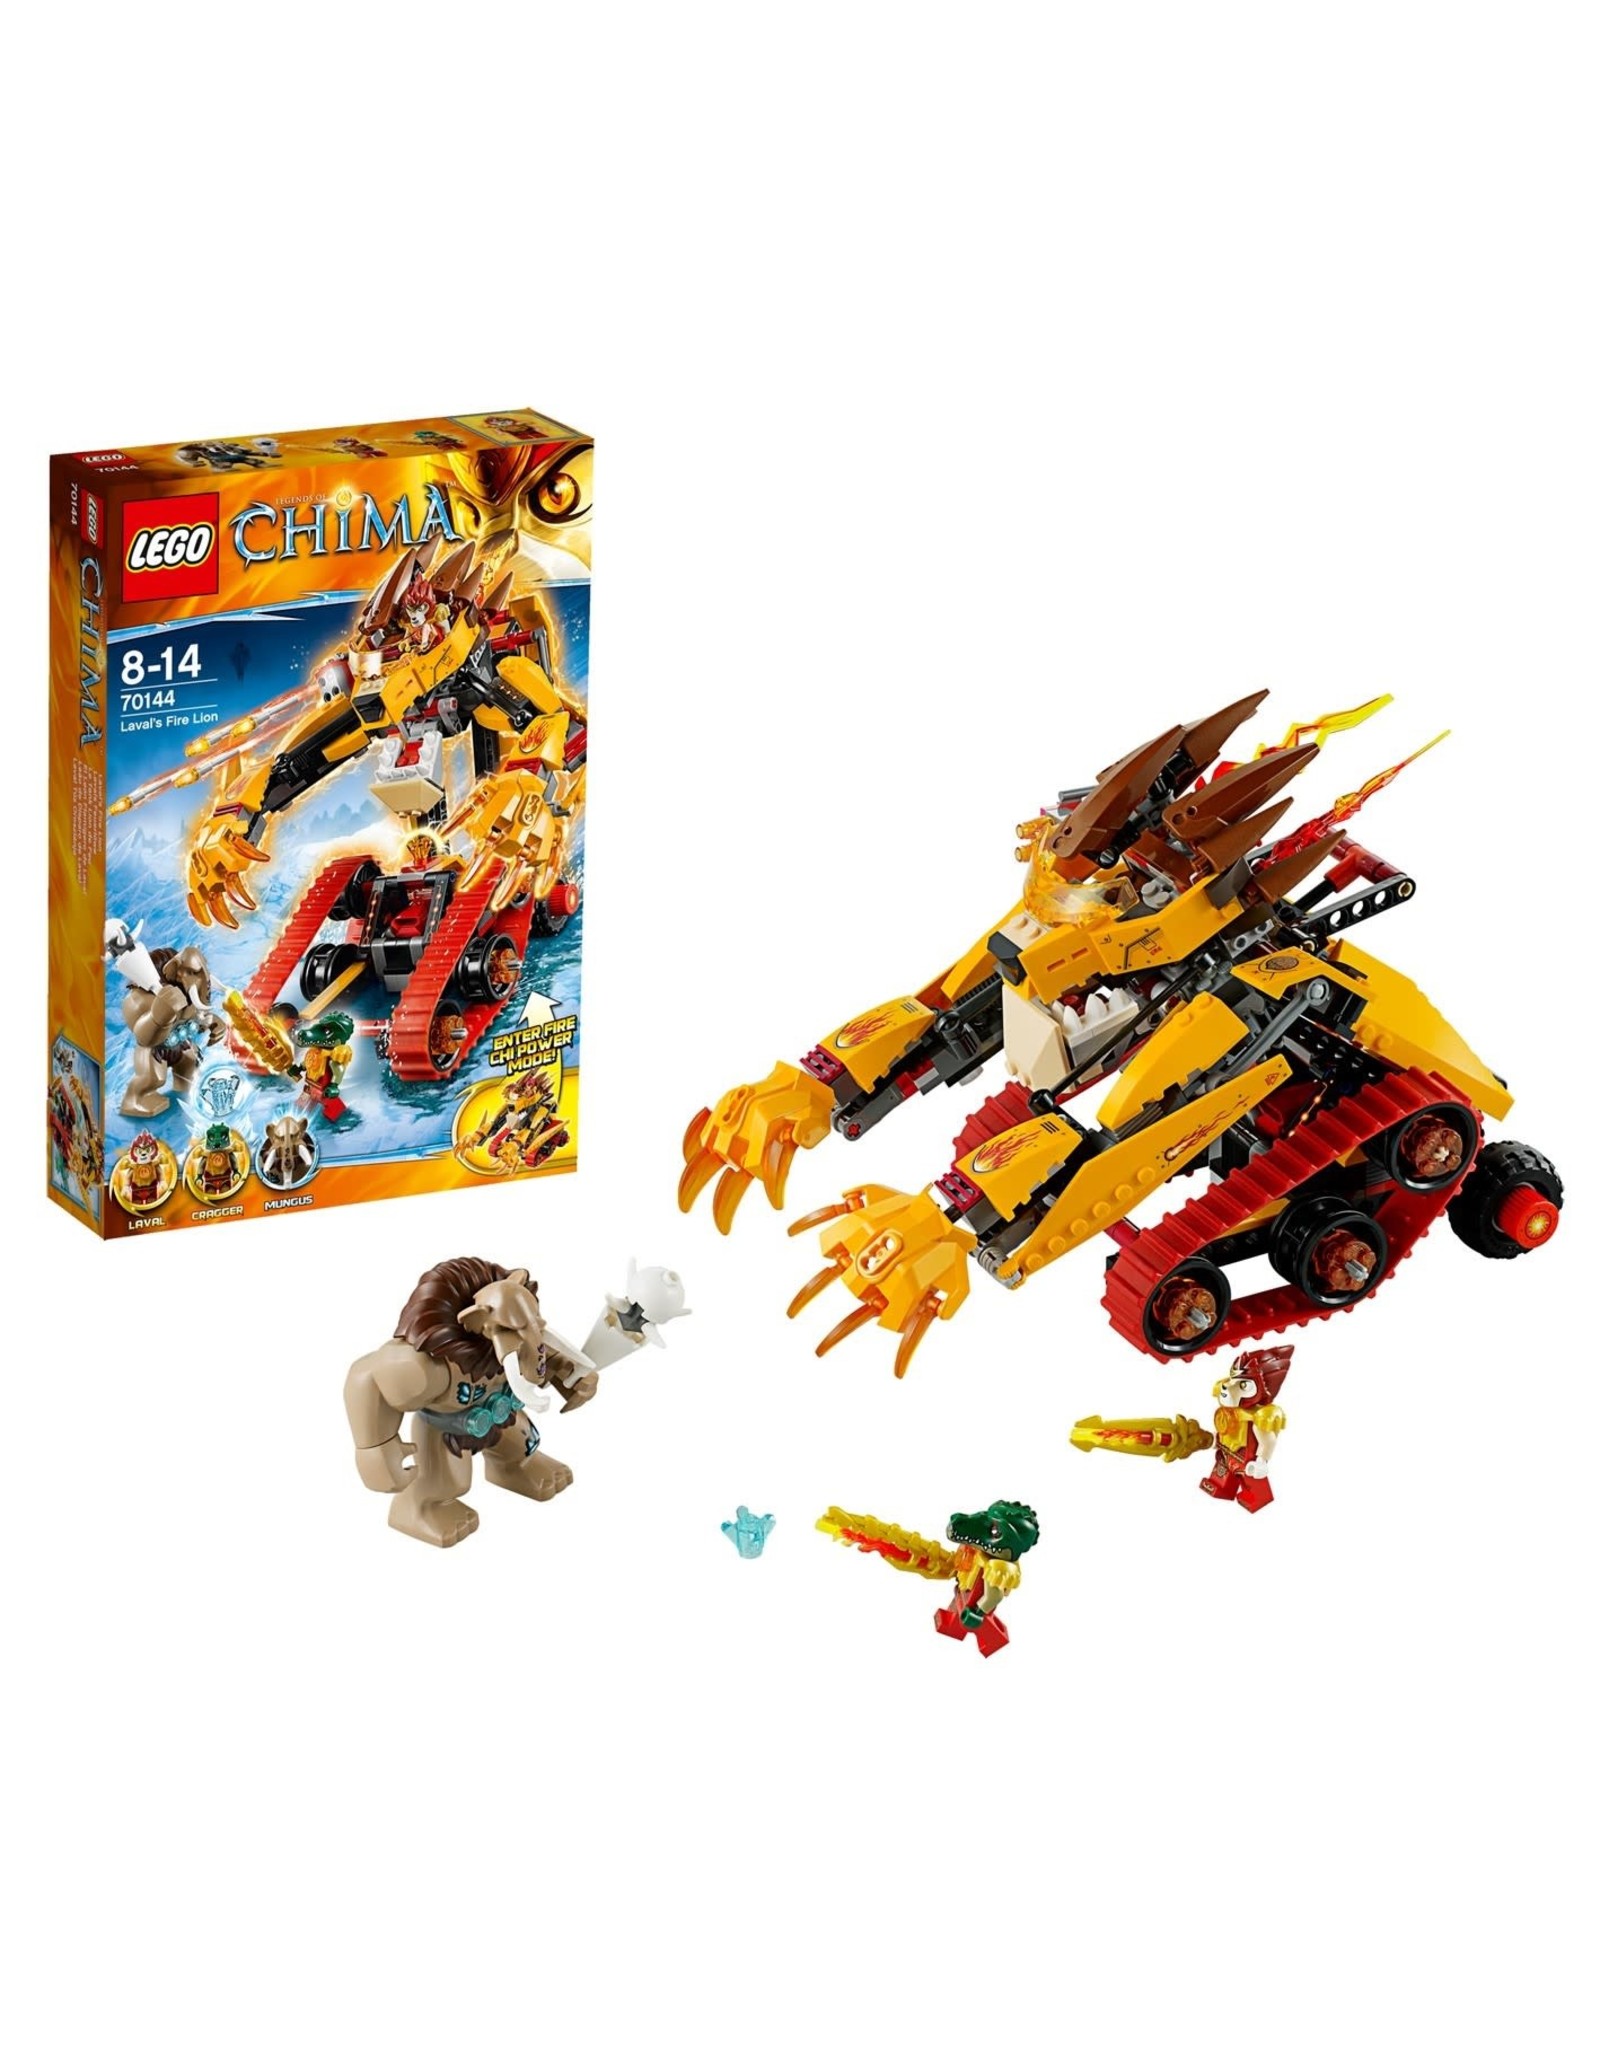 Lego Chima LEGO Chima 70144 Lavals Vuurleeuw